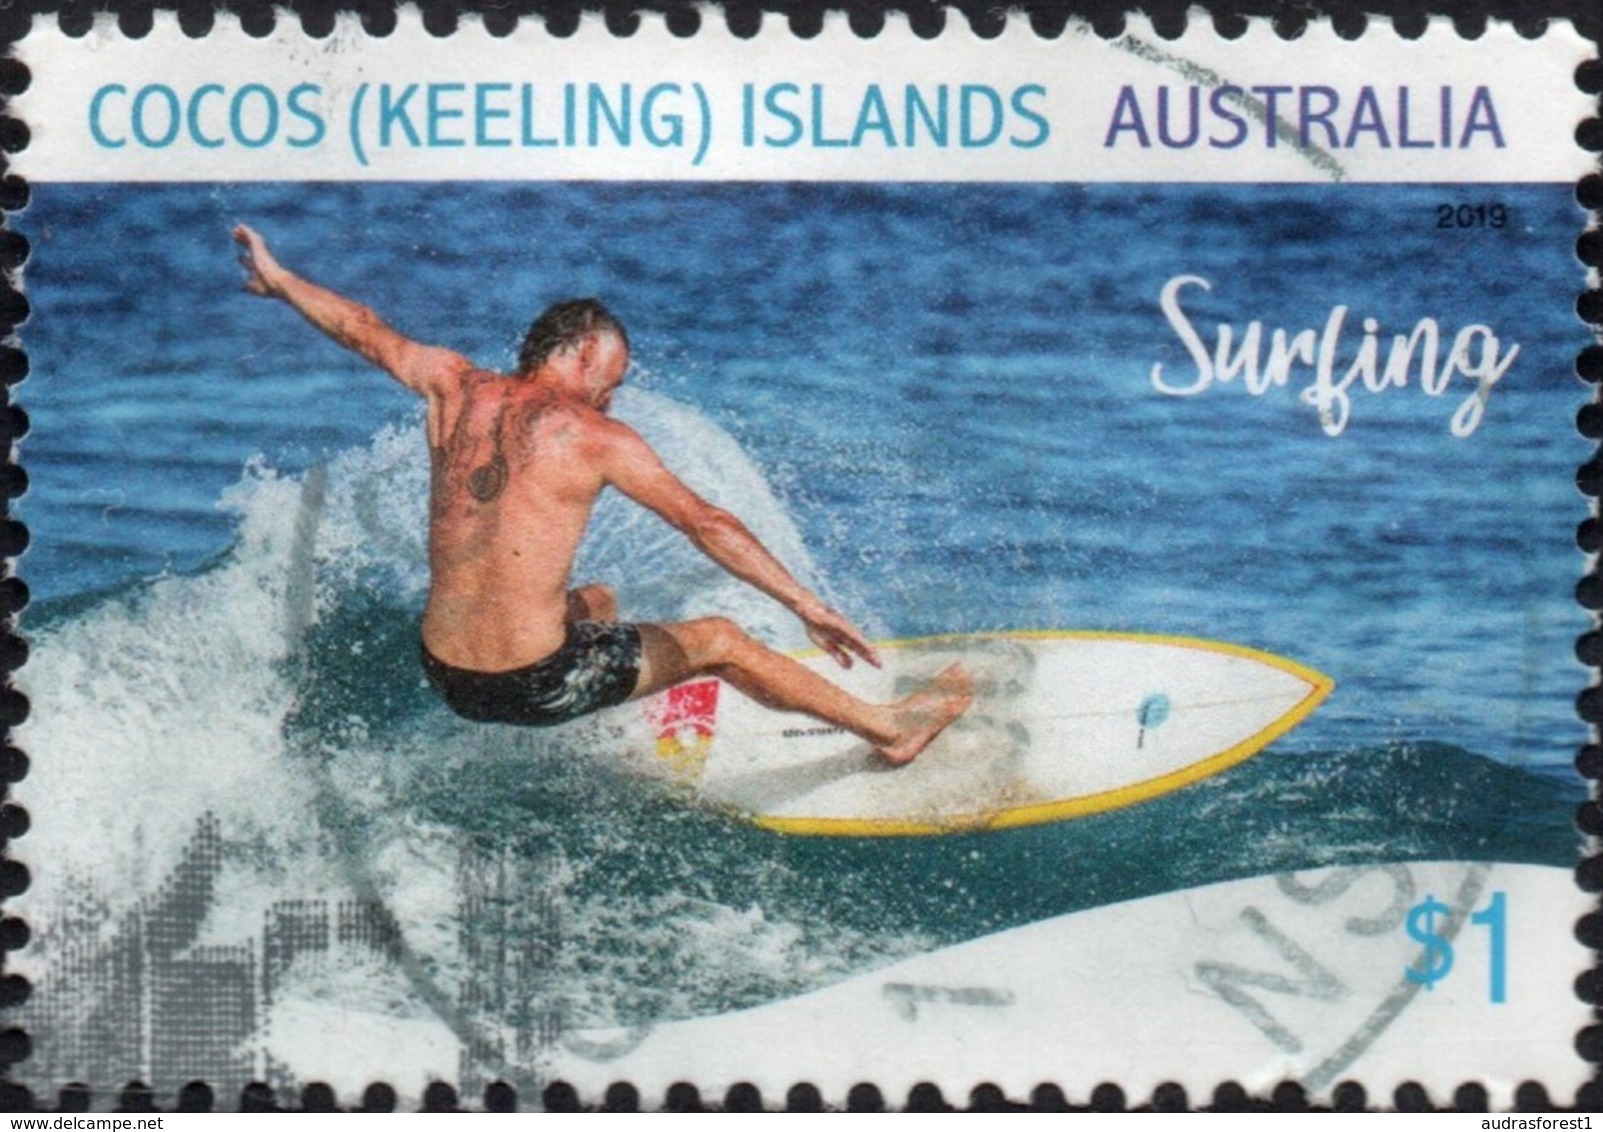 2019 COCOS KEELING ISLANDS $1 SURFING Very Fine POSTALLY USED Stamp - Cocoseilanden